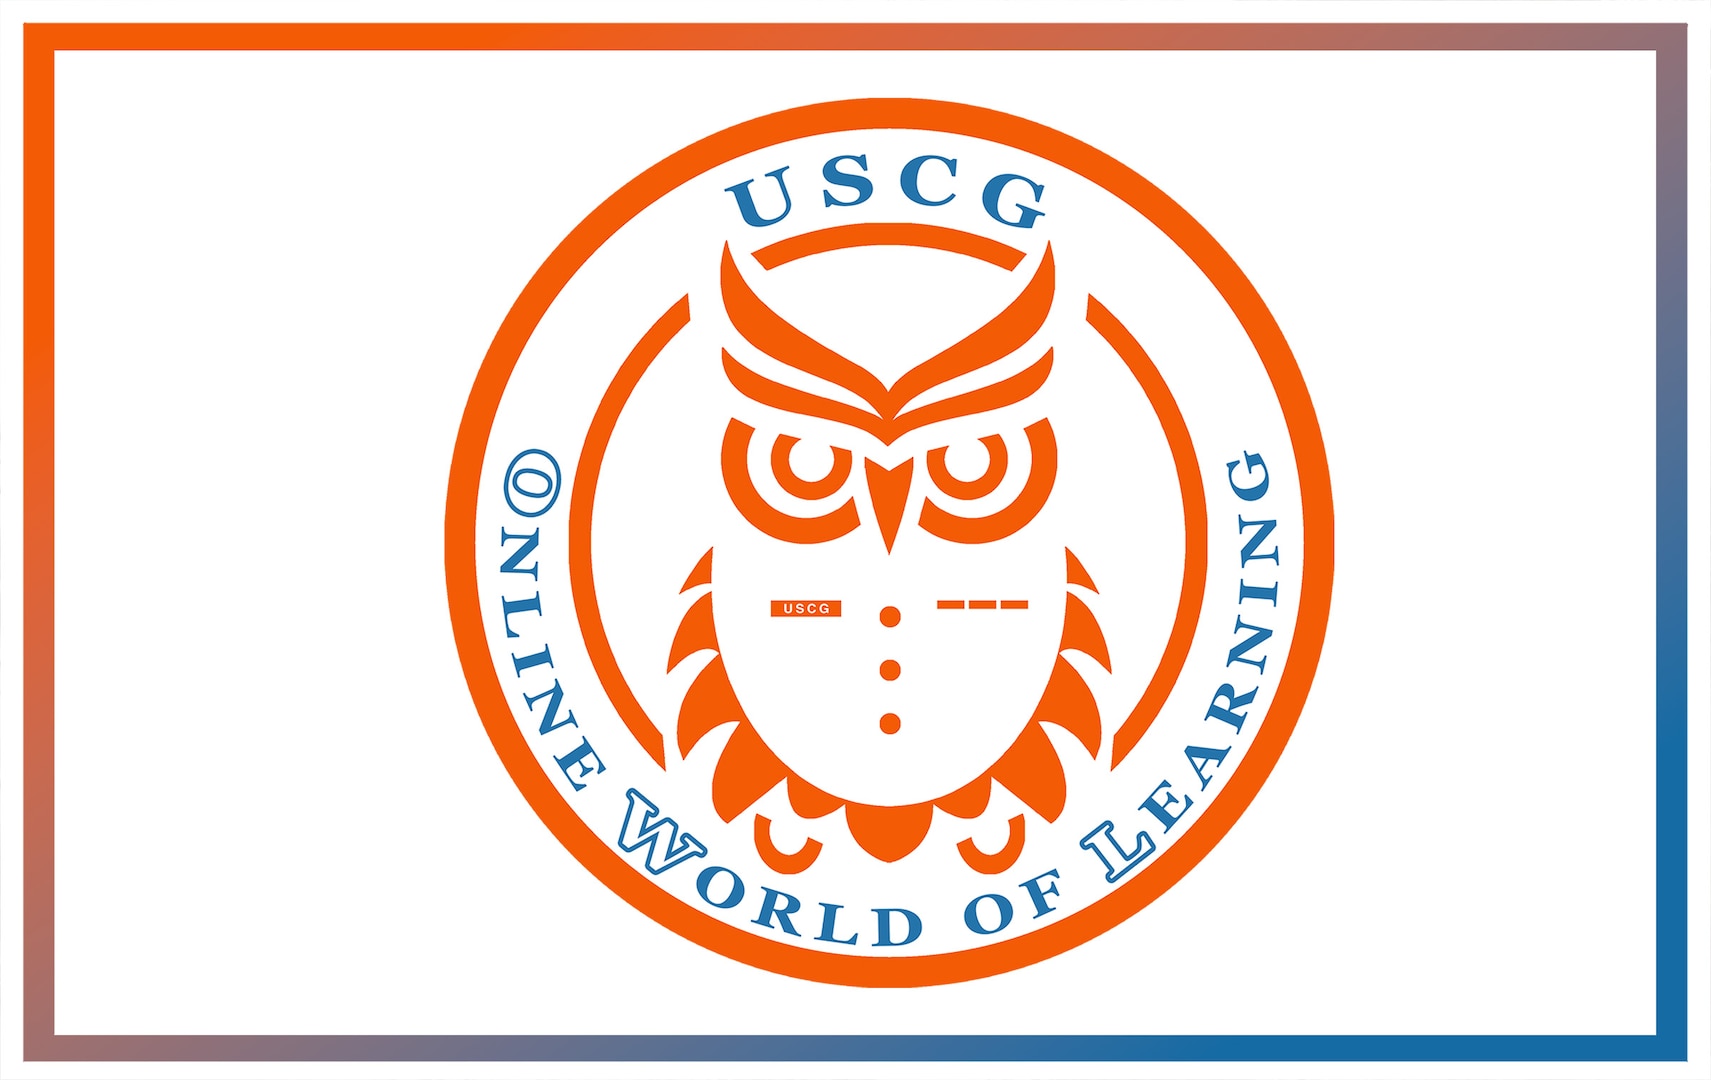 CG-OWL: Coast Guard Online World of Learning logo